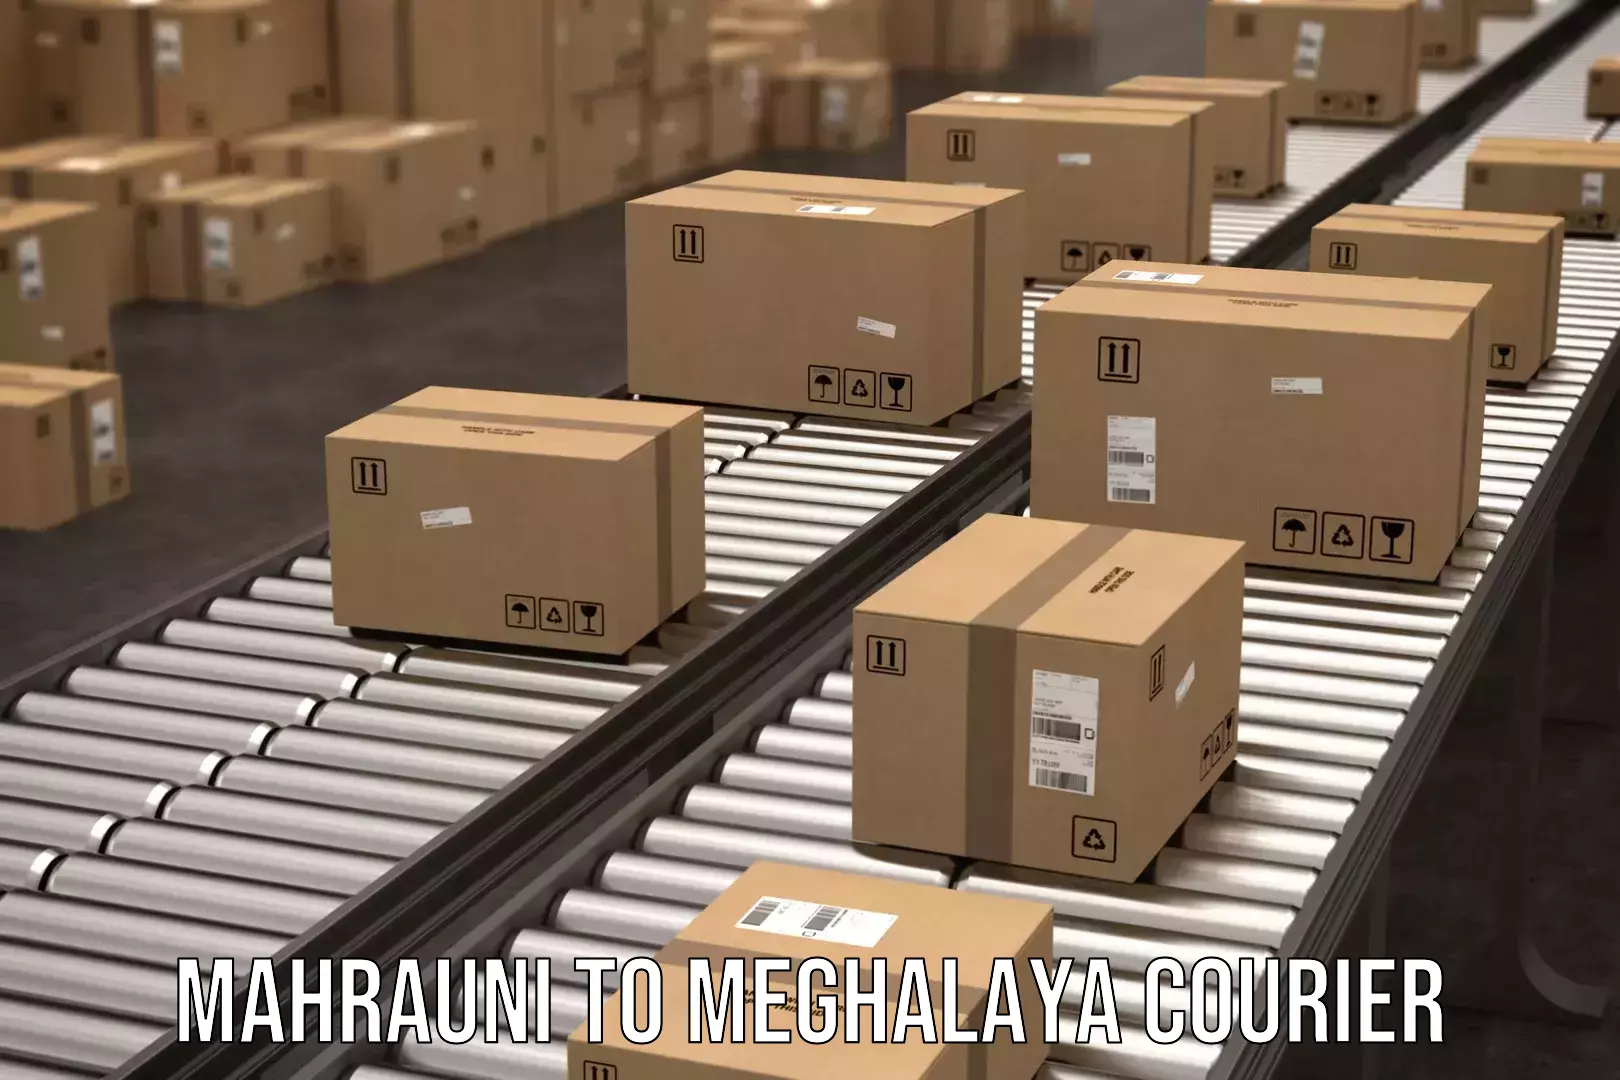 Global courier networks Mahrauni to Meghalaya